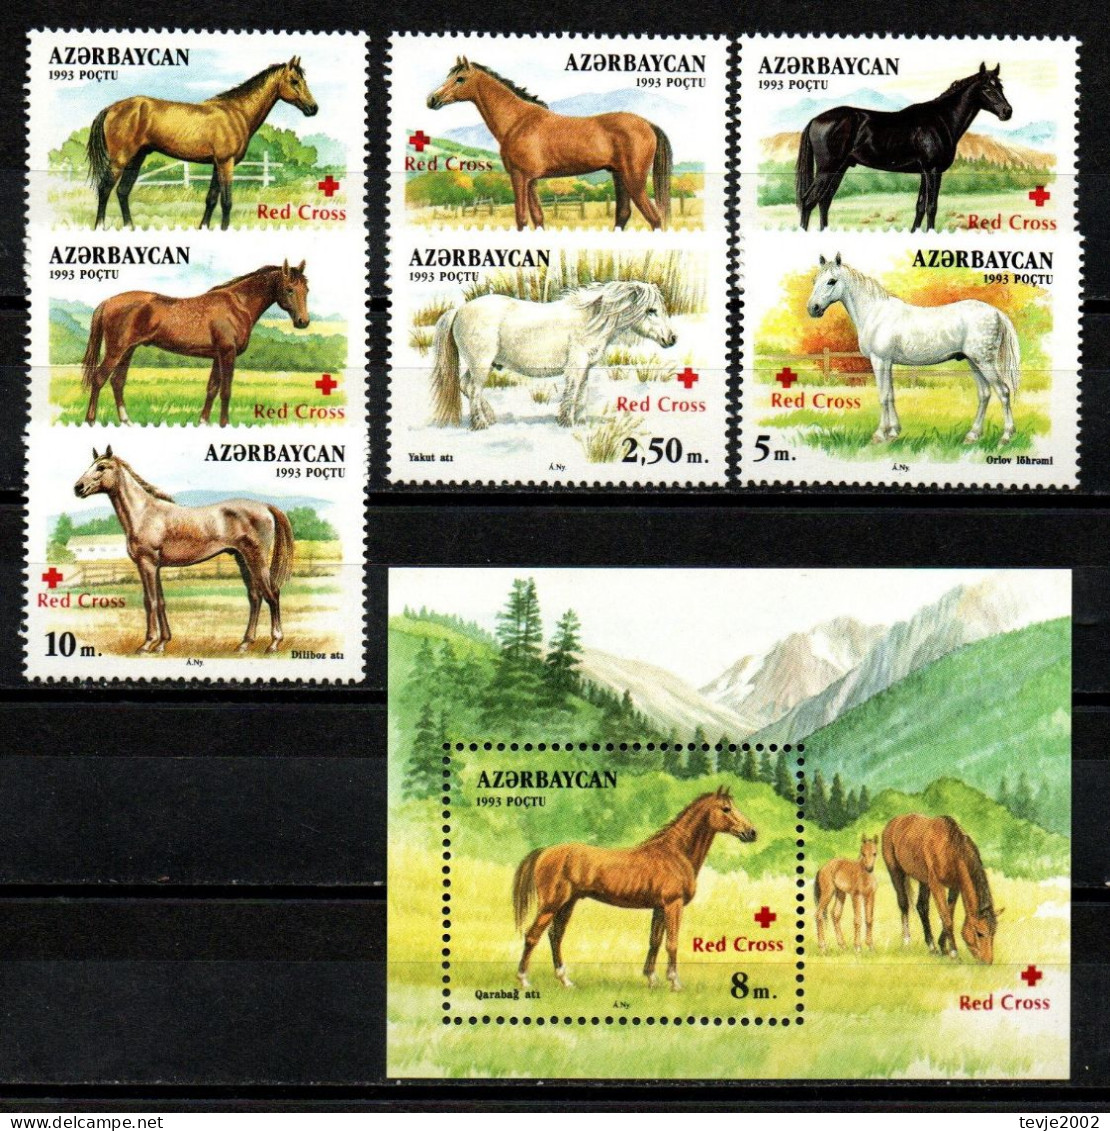 Aserbaidschan 1997 - Mi.Nr. 353 - 359 + Block 27 - Postfrisch MNH - Tiere Animals Pferde Horses Rotes Kreuz Red Cross - Azerbaiján